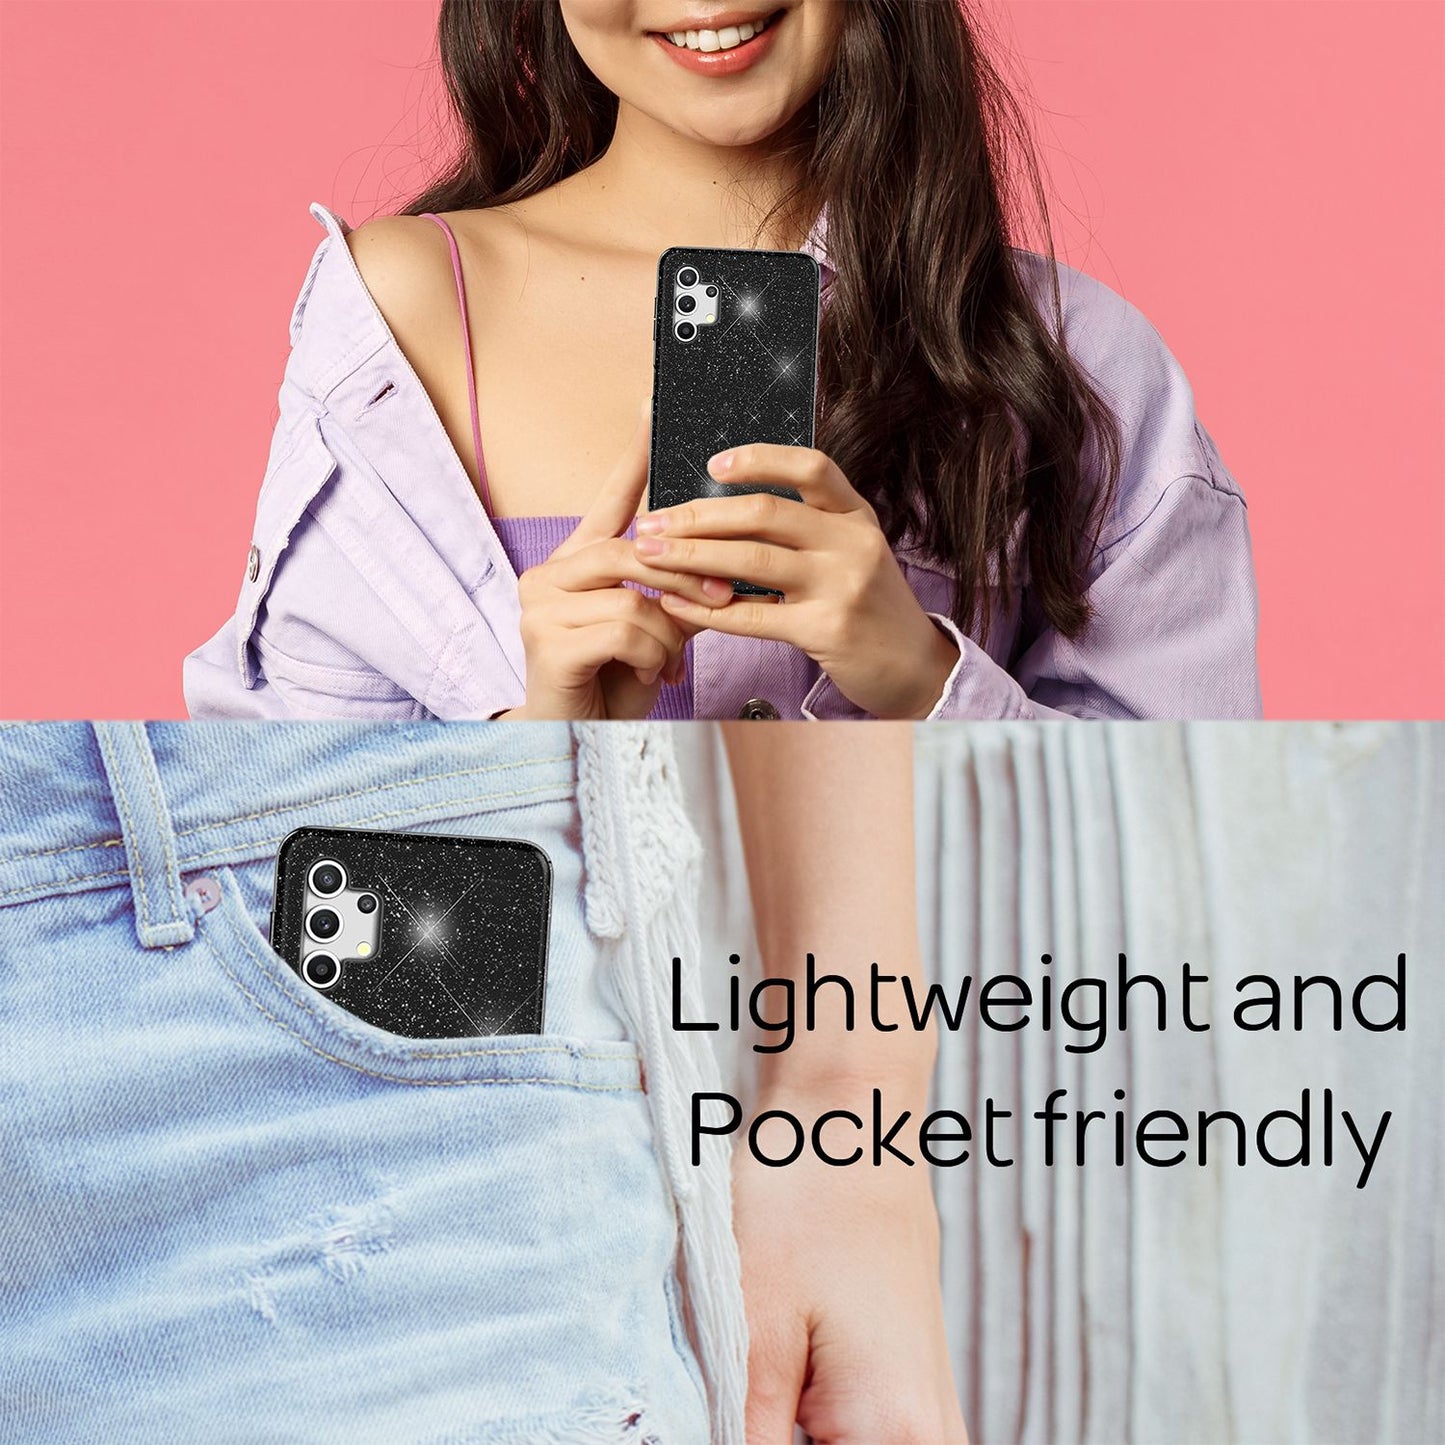 NALIA Glitzer Handy Hülle für Samsung Galaxy A32 5G, Silikon Cover Case Glänzend